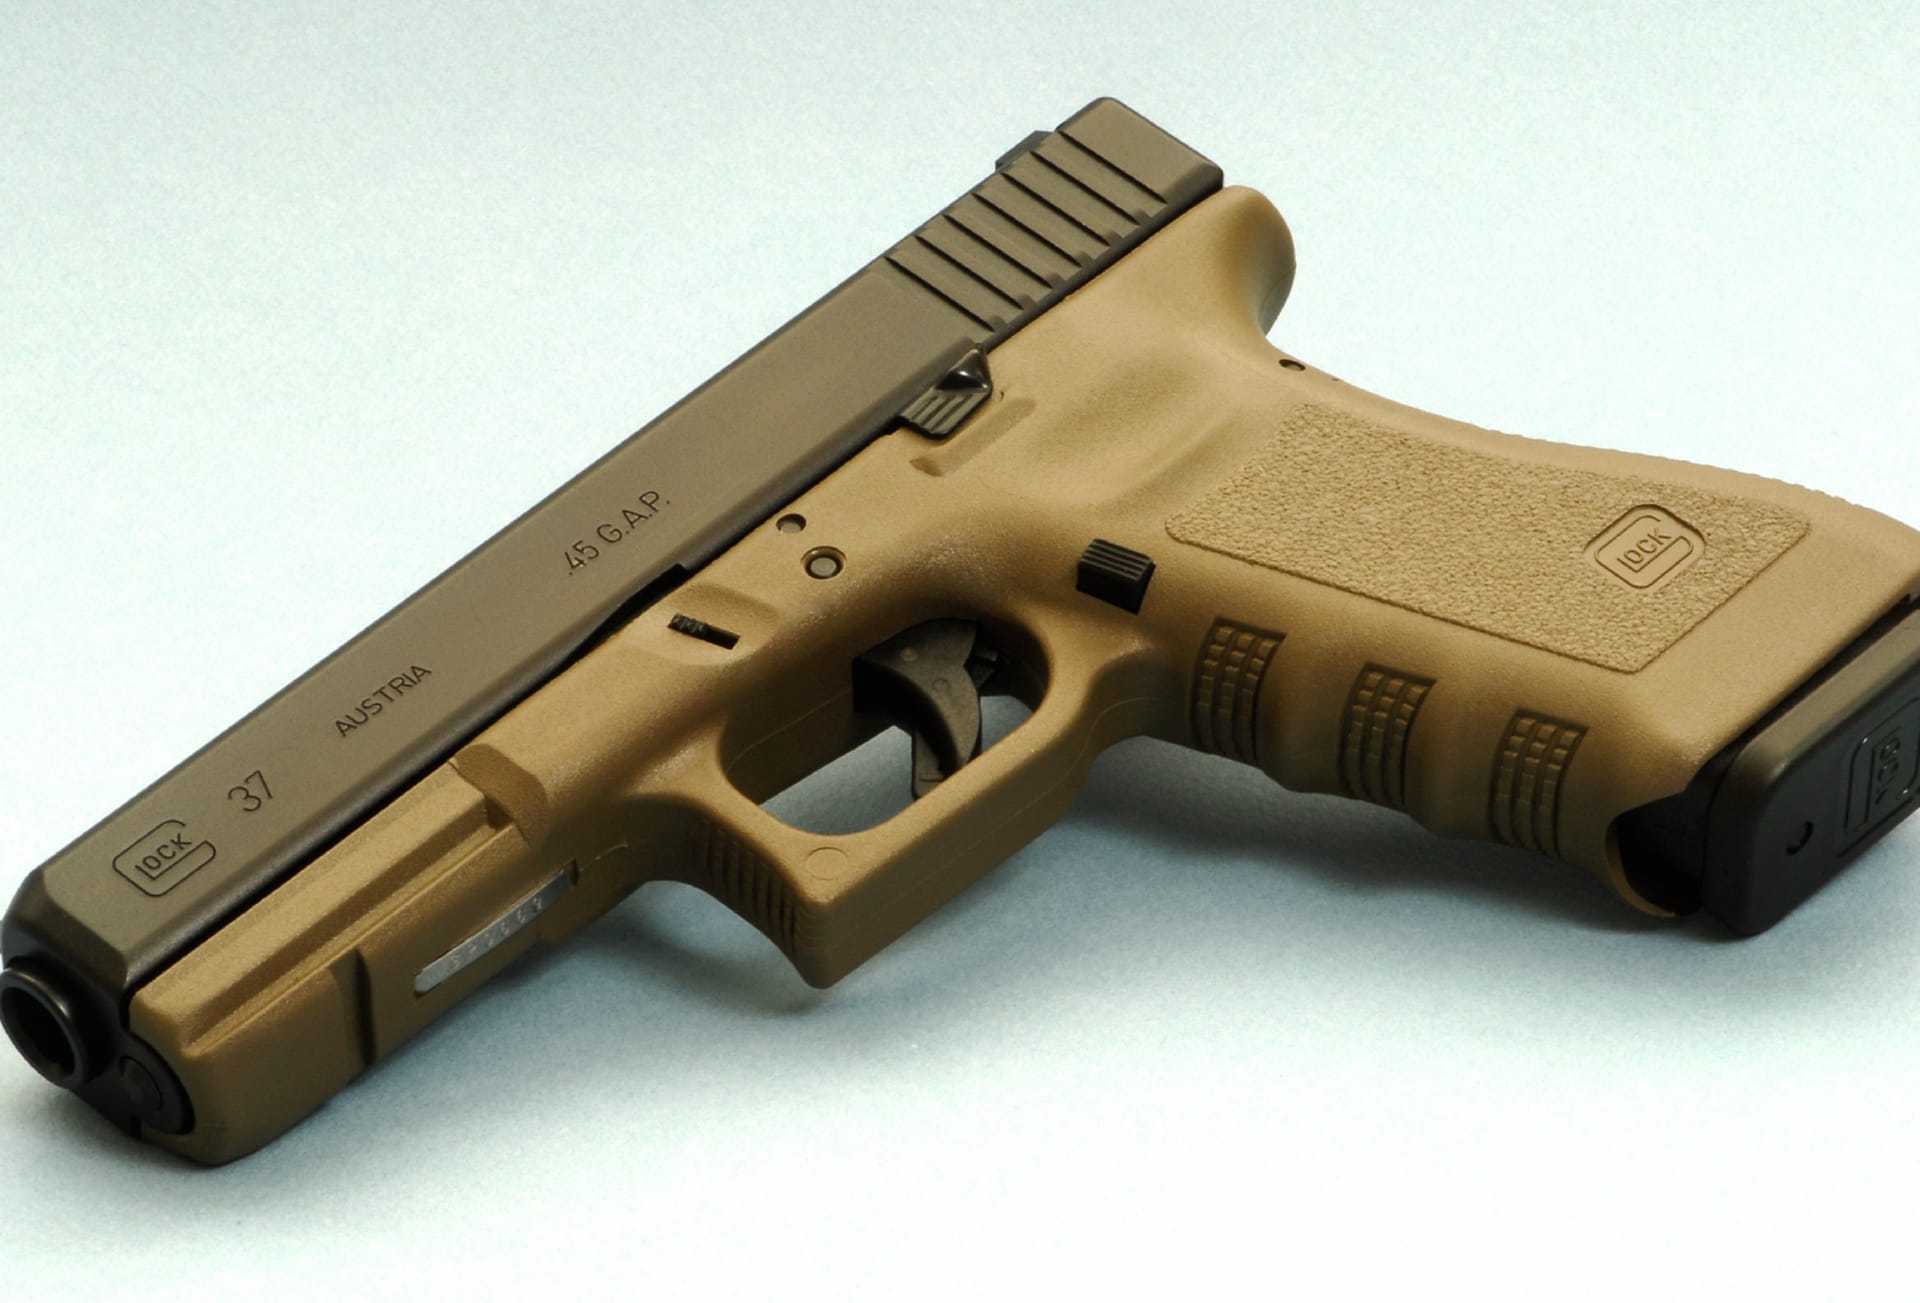 Glock 37 Pistol wallpapers HD quality